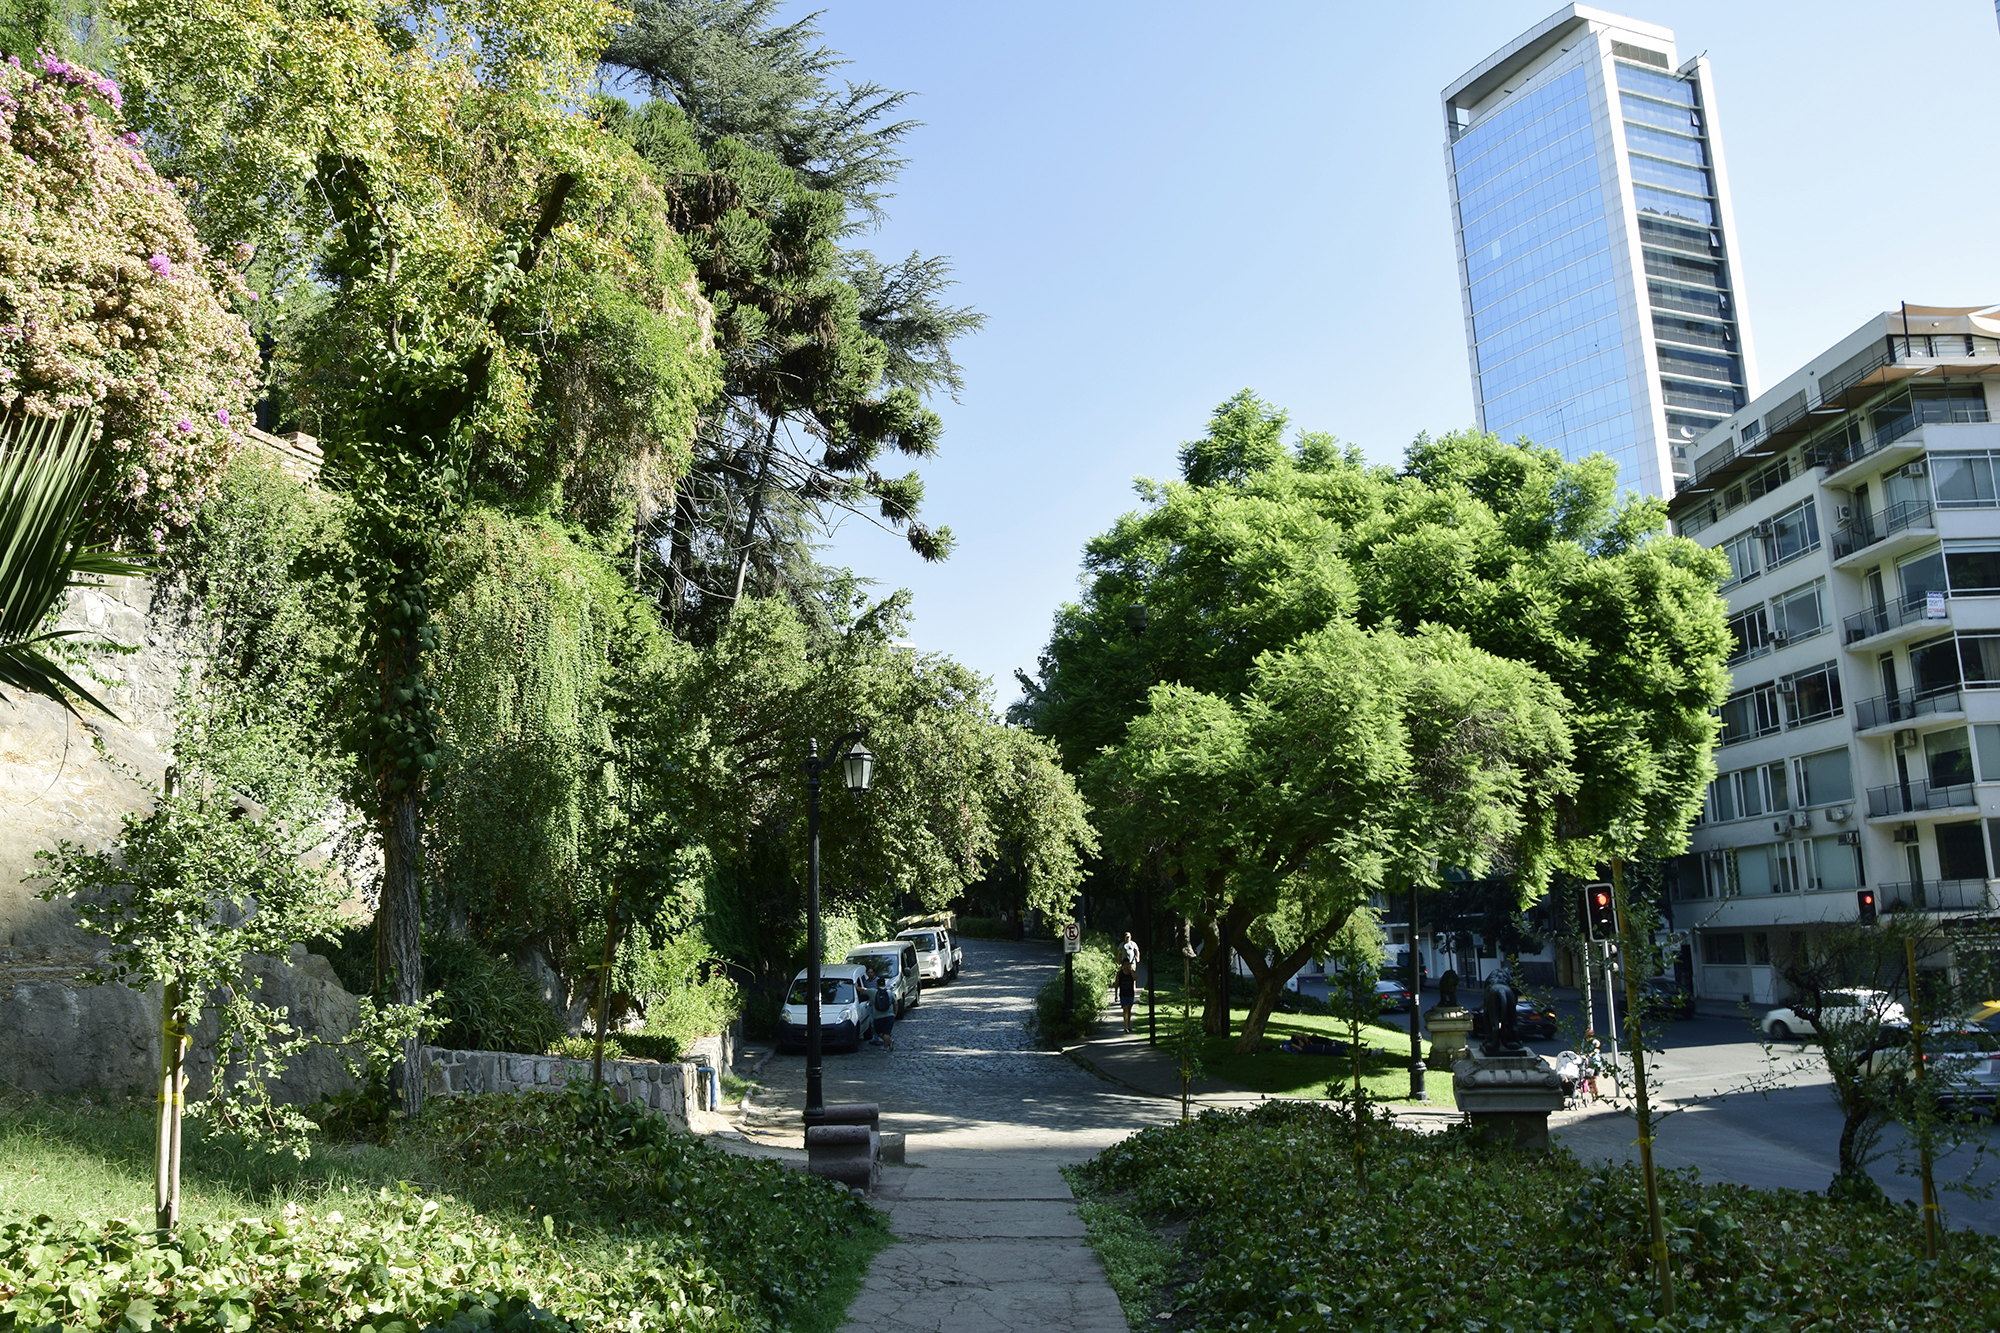 Urban park Cerro Santa Lucia in the center of Santiago, Chile.